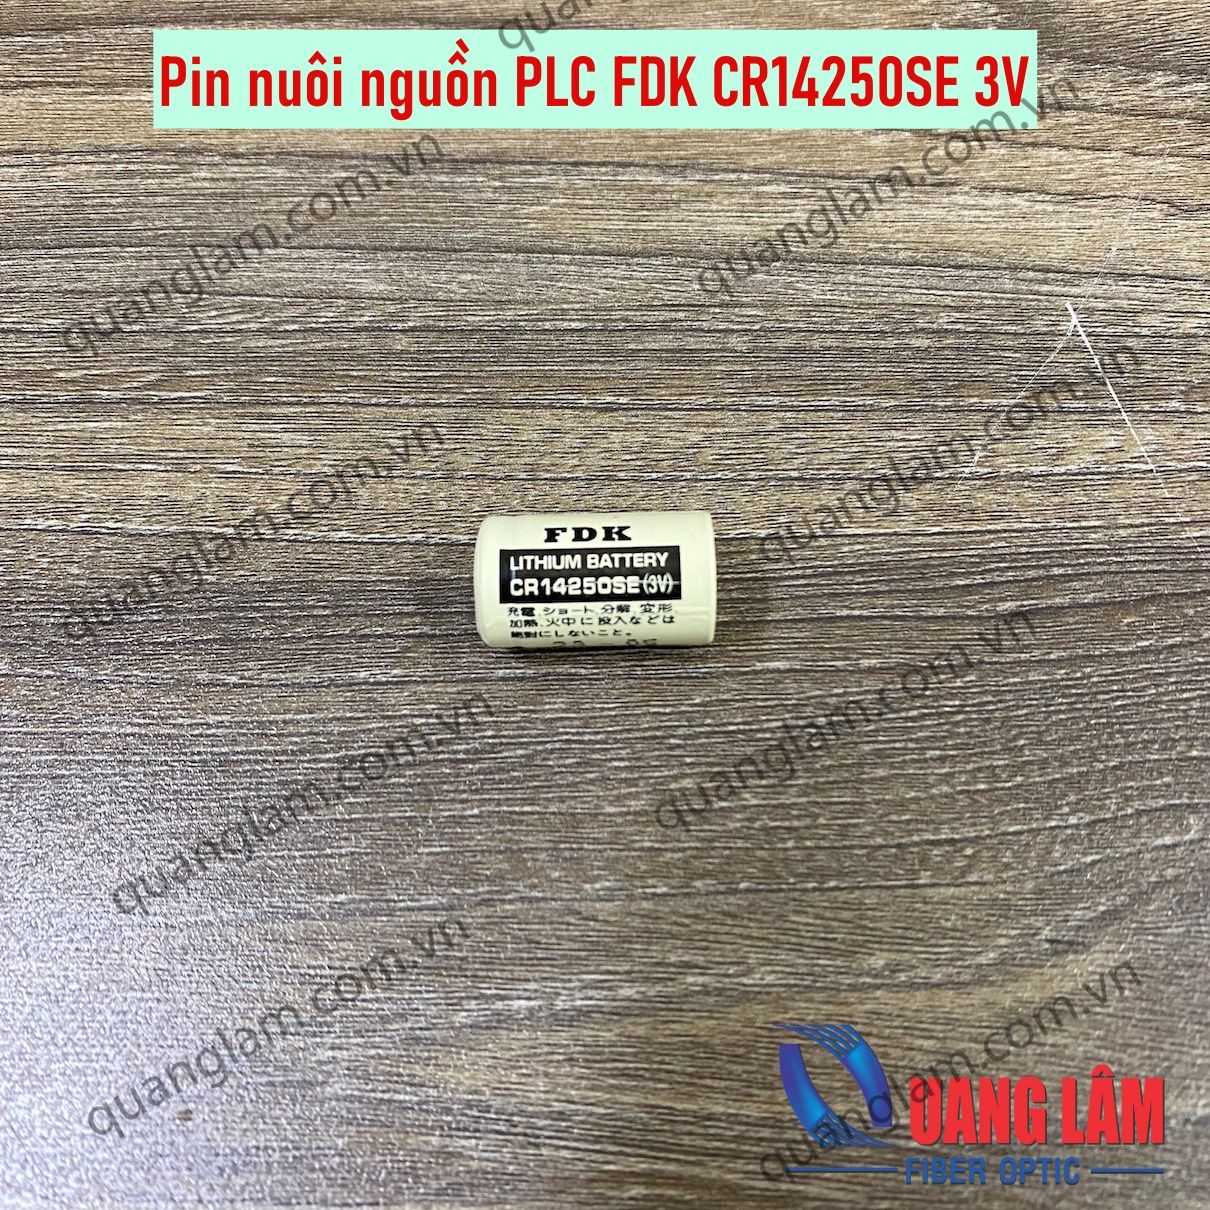 Pin nuôi nguồn PLC FDK FDK CR14250SE 3V